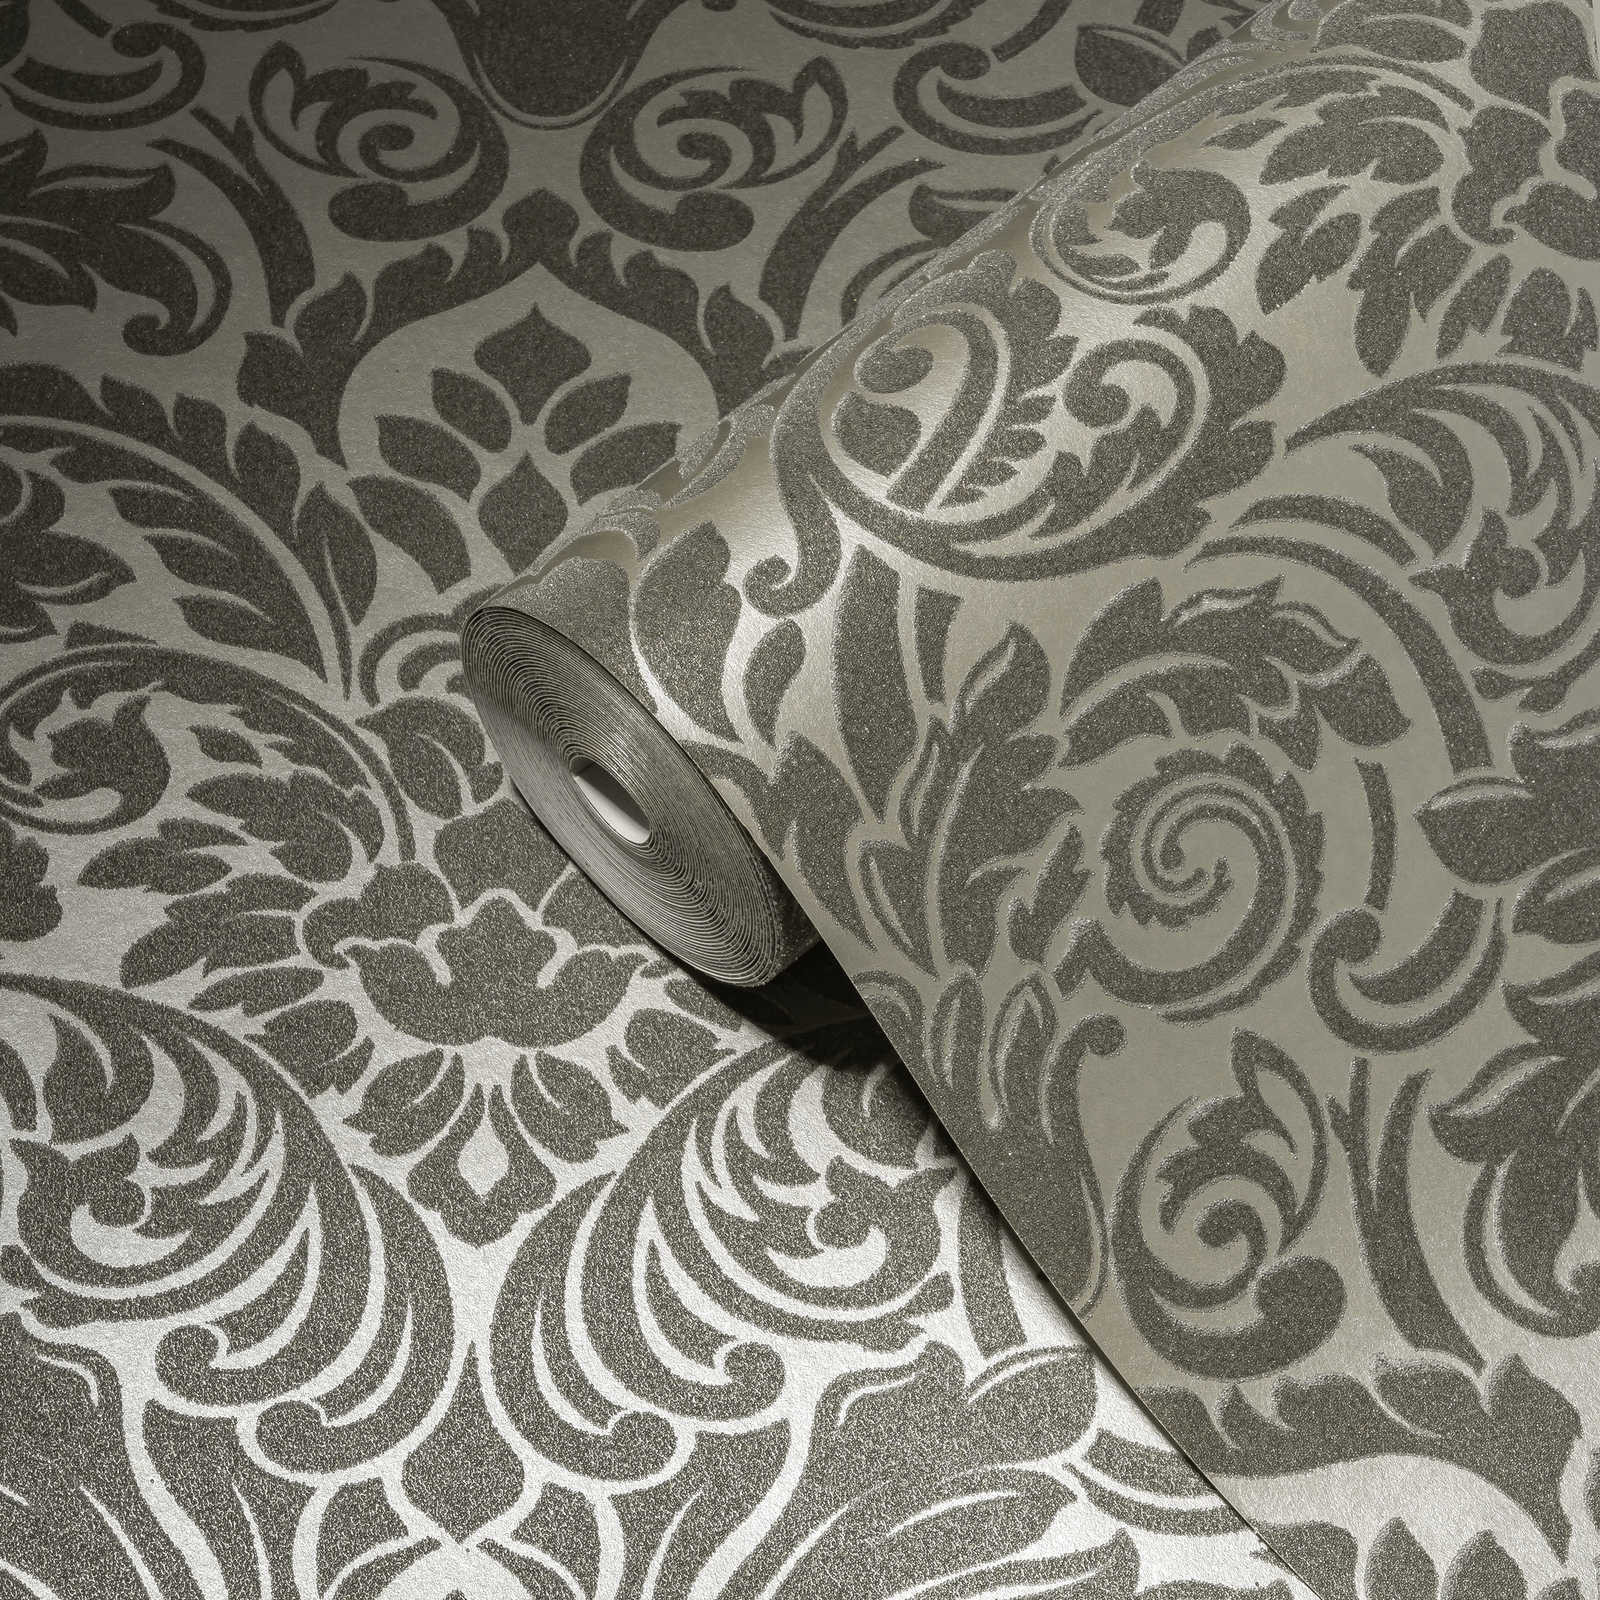             Ornamenttapete Metallic-Effekt & florales Design – Silber, Grau
        